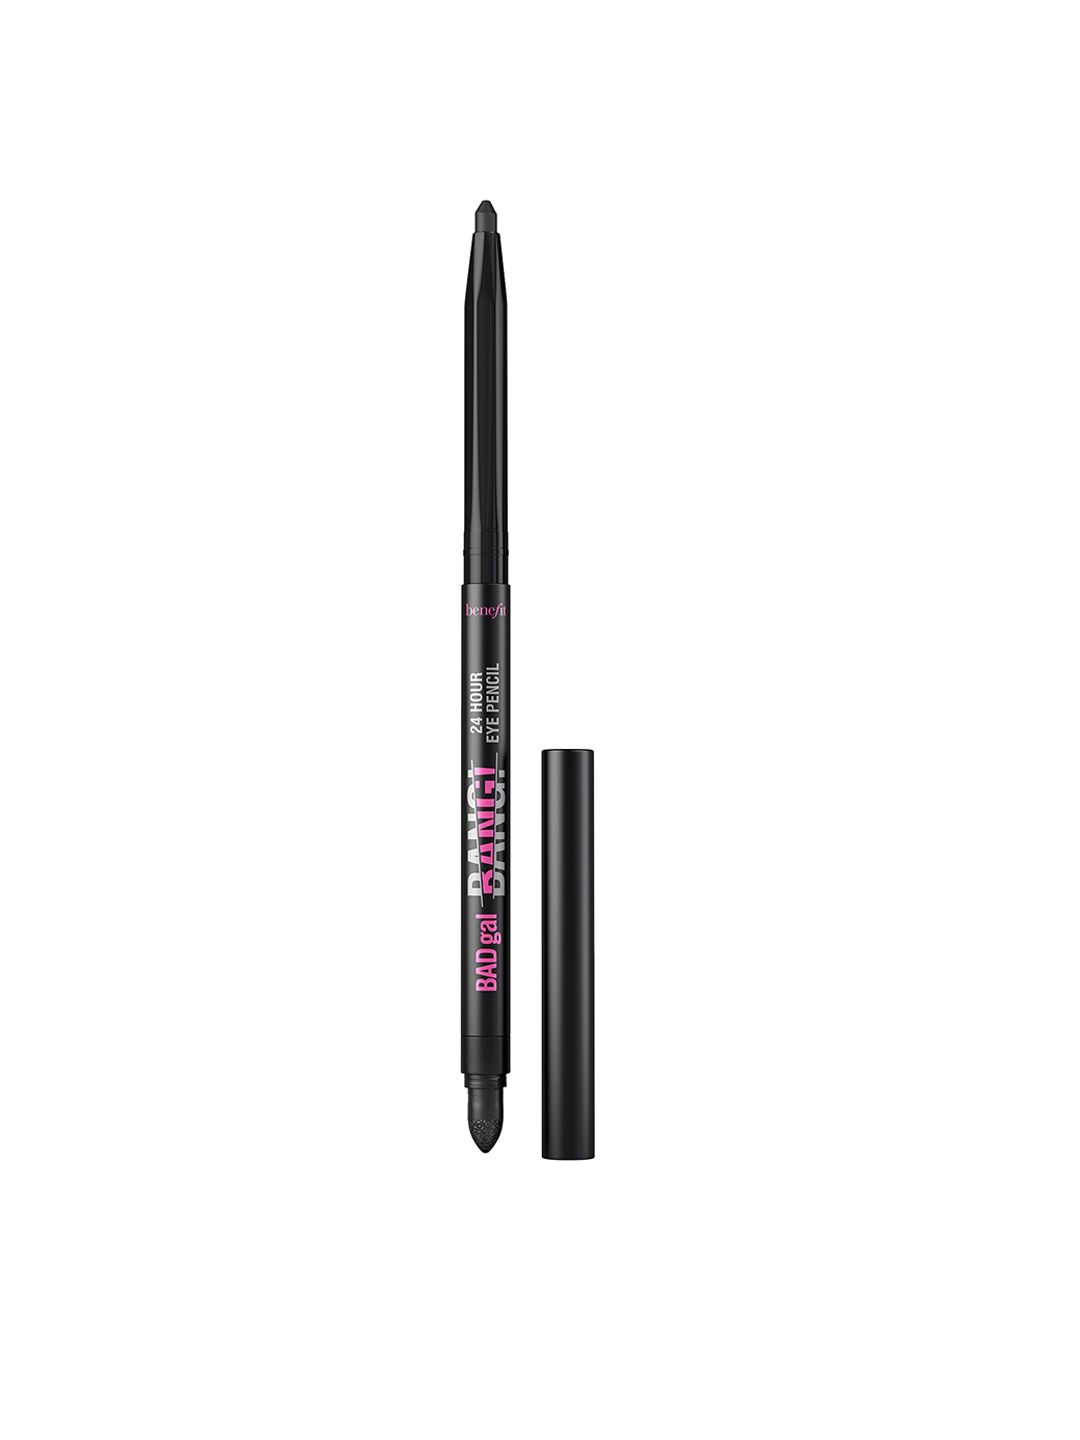 Benefit Cosmetics BADgal Bang Pencil Eyeliner Black Price in India